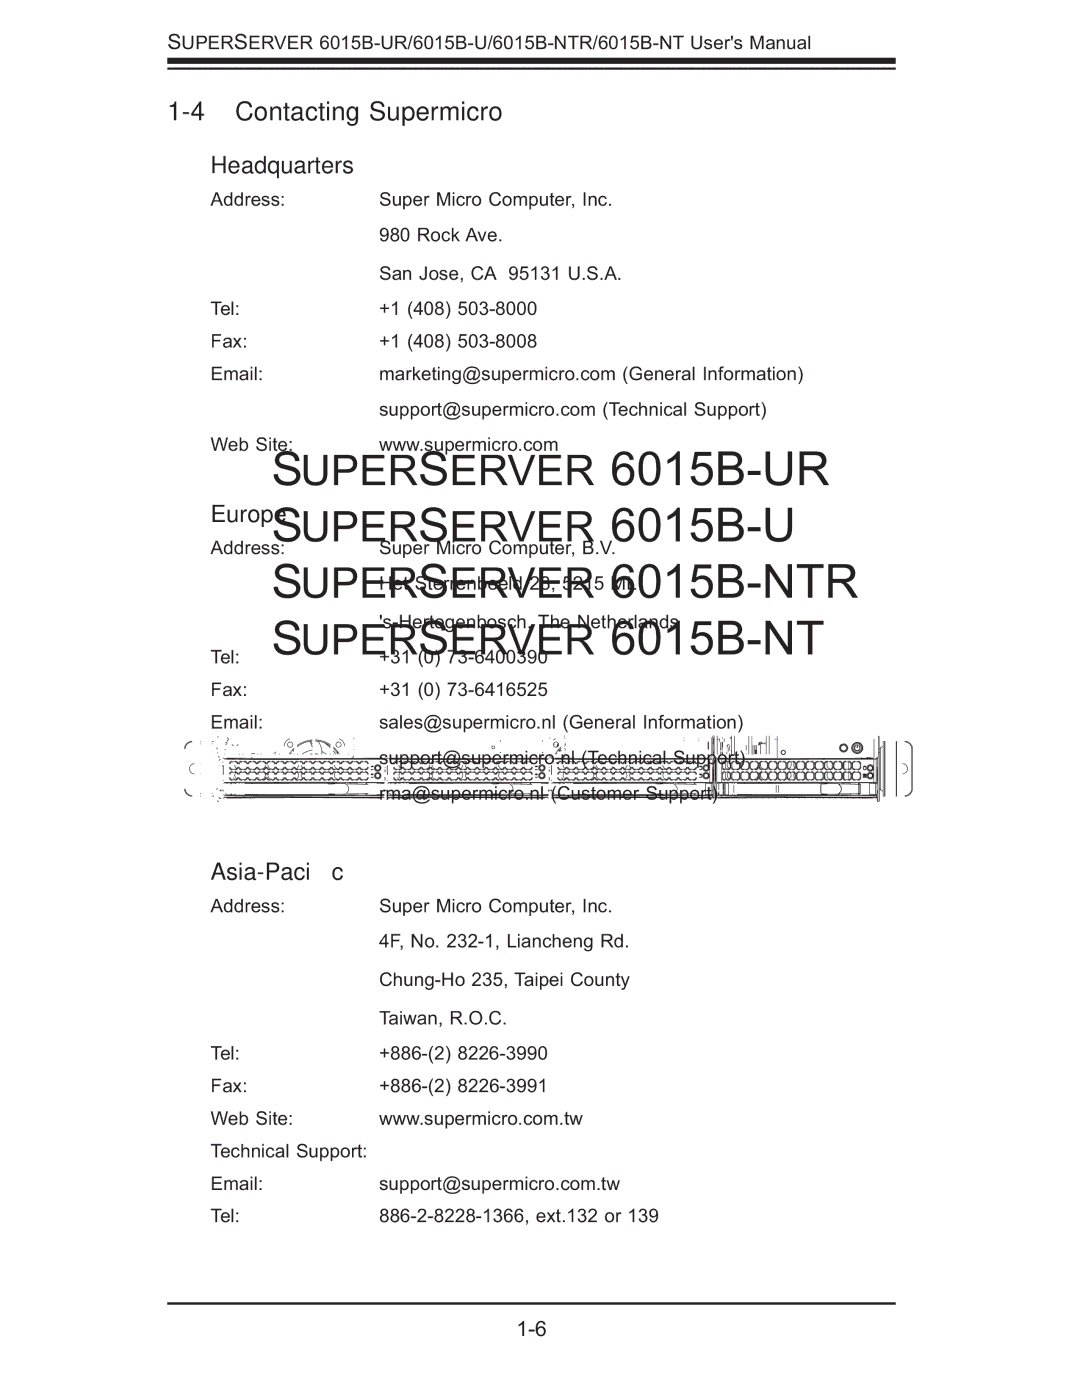 SUPER MICRO Computer 6015B-NTR, 6015B-U, 6015b-RU user manual Contacting Supermicro, Headquarters, Europe, Asia-Paciﬁc 